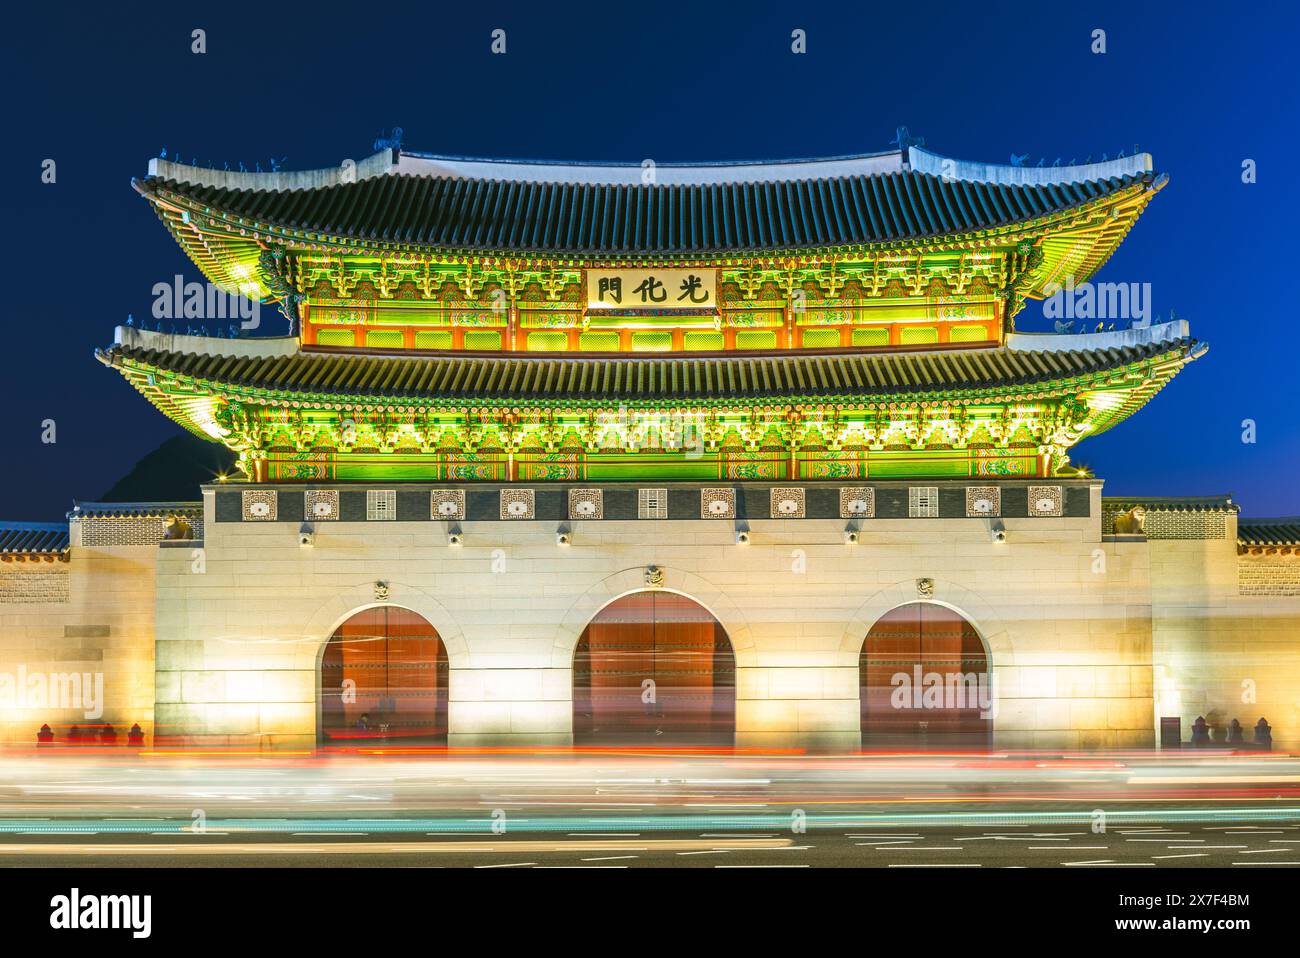 Gwanghwamun, main gate of Gyeongbokgung Palace in Seoul, South Korea. Translation: Gwanghwamun Stock Photo